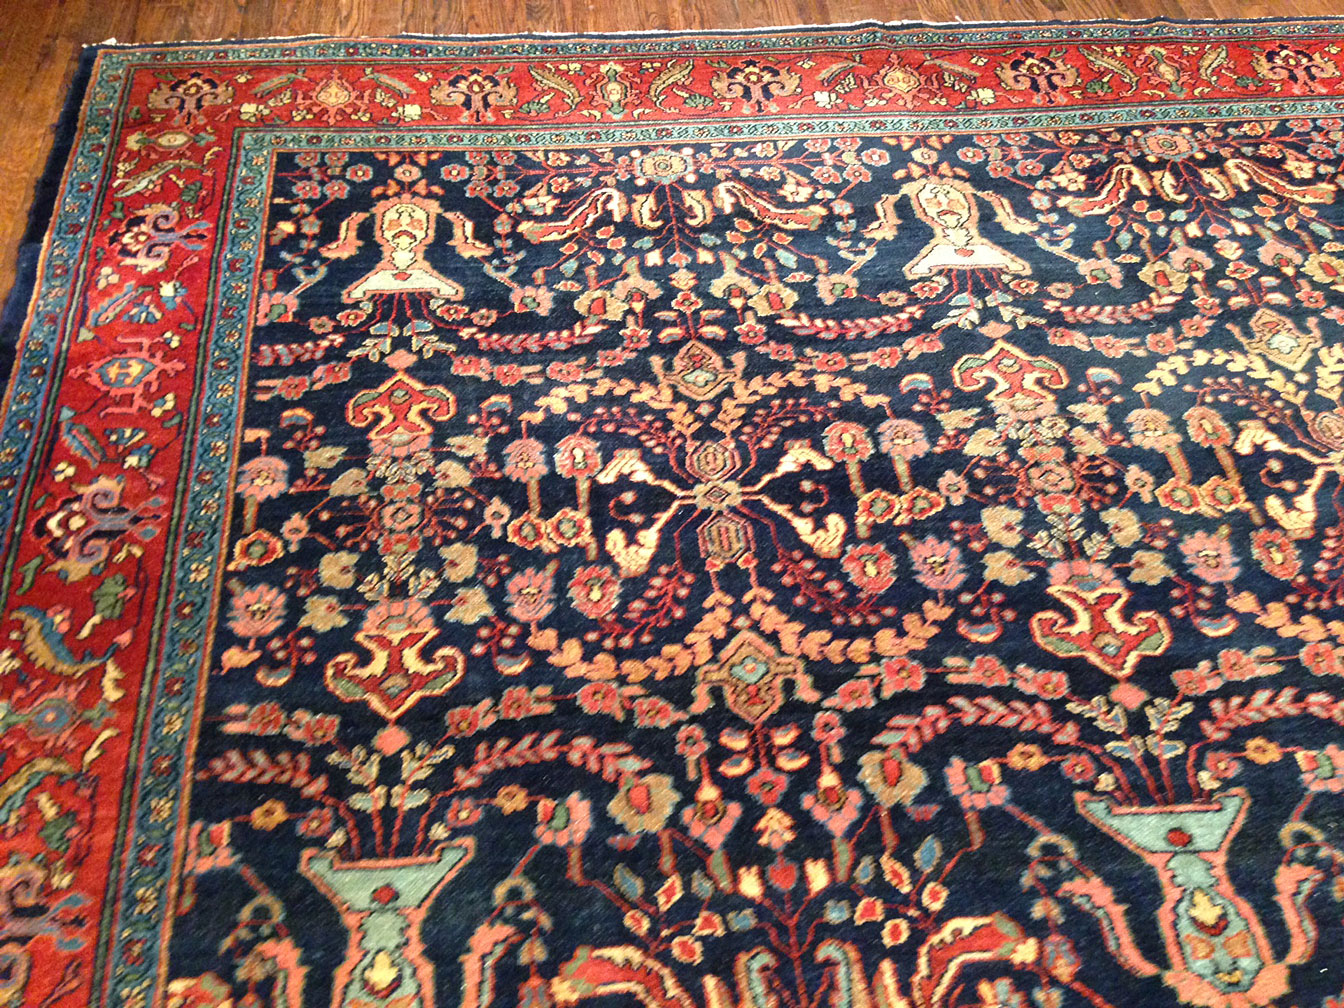 Antique bibi kabad Carpet - # 5877